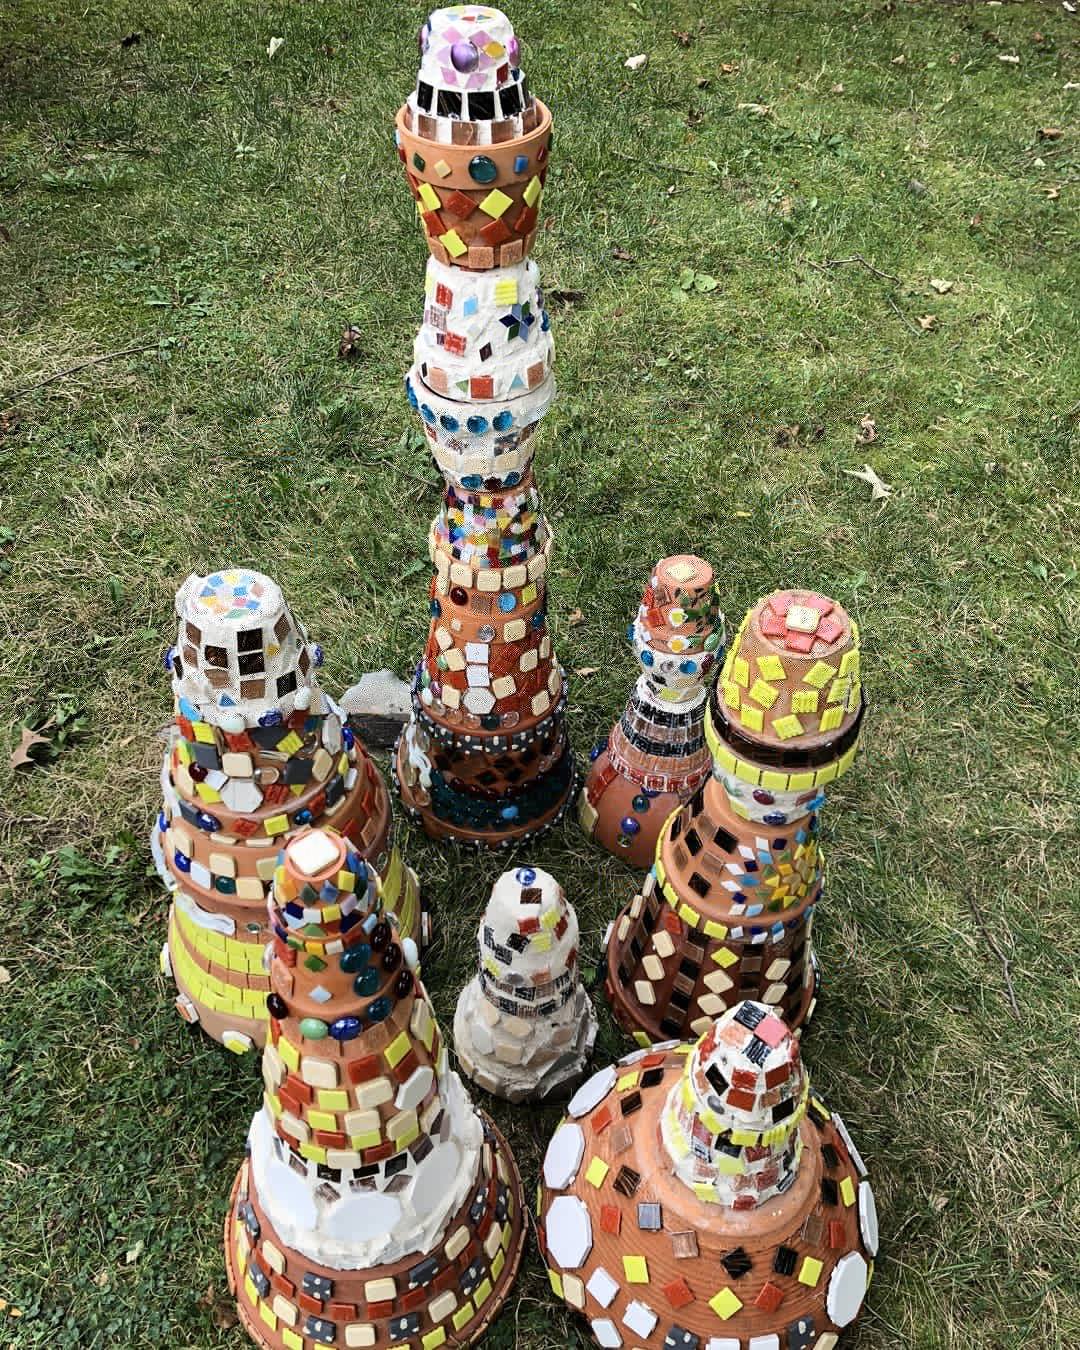 Suclpture of mosiac pots community art project